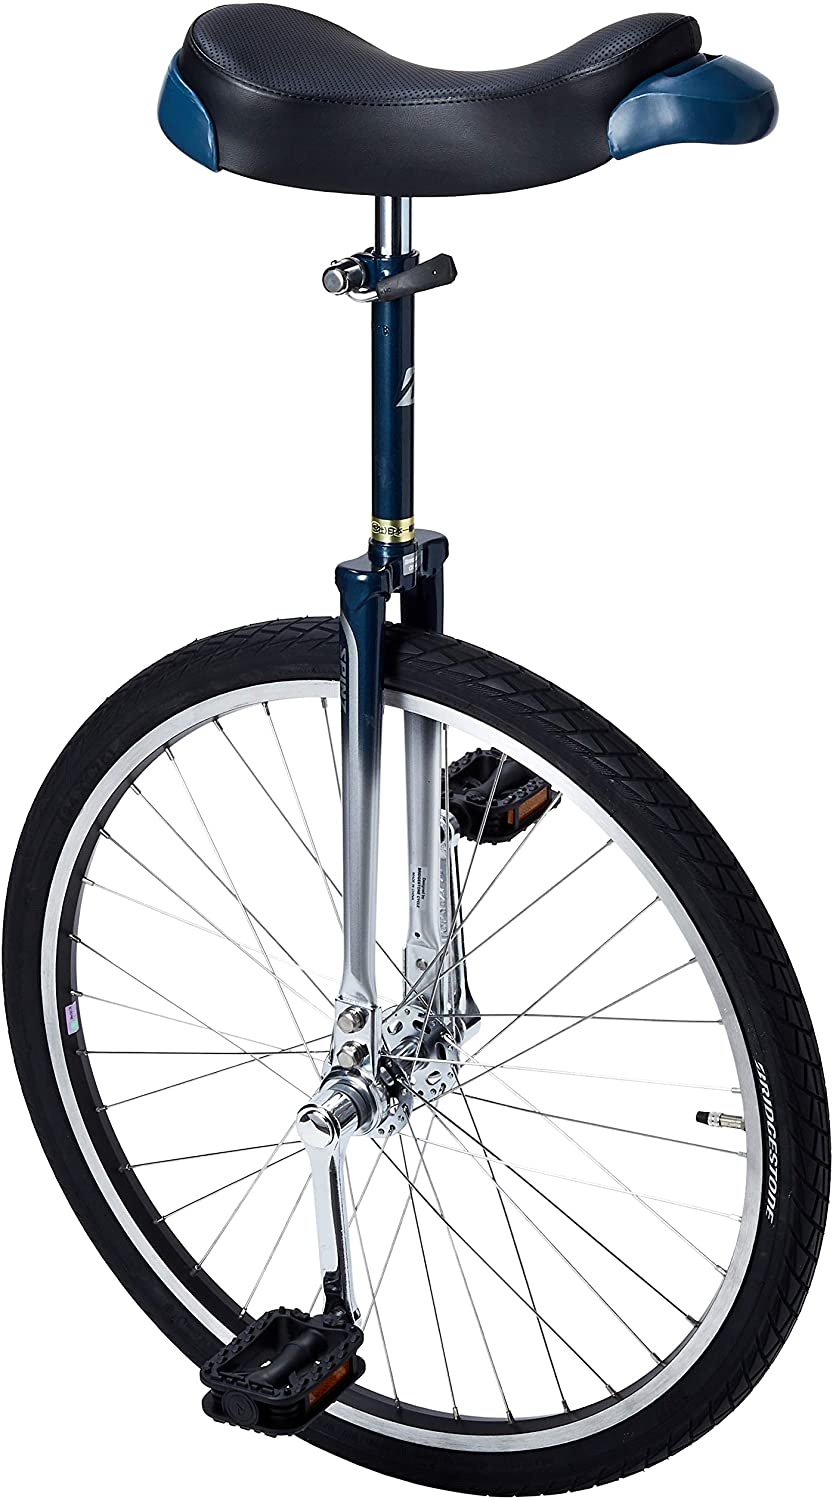 sumunior 一輪車 20インチ 高さ調節可能なスキッドプルーフマウンテンバランスのバランス運動 競争的な一輪車の自己バランスをとって一